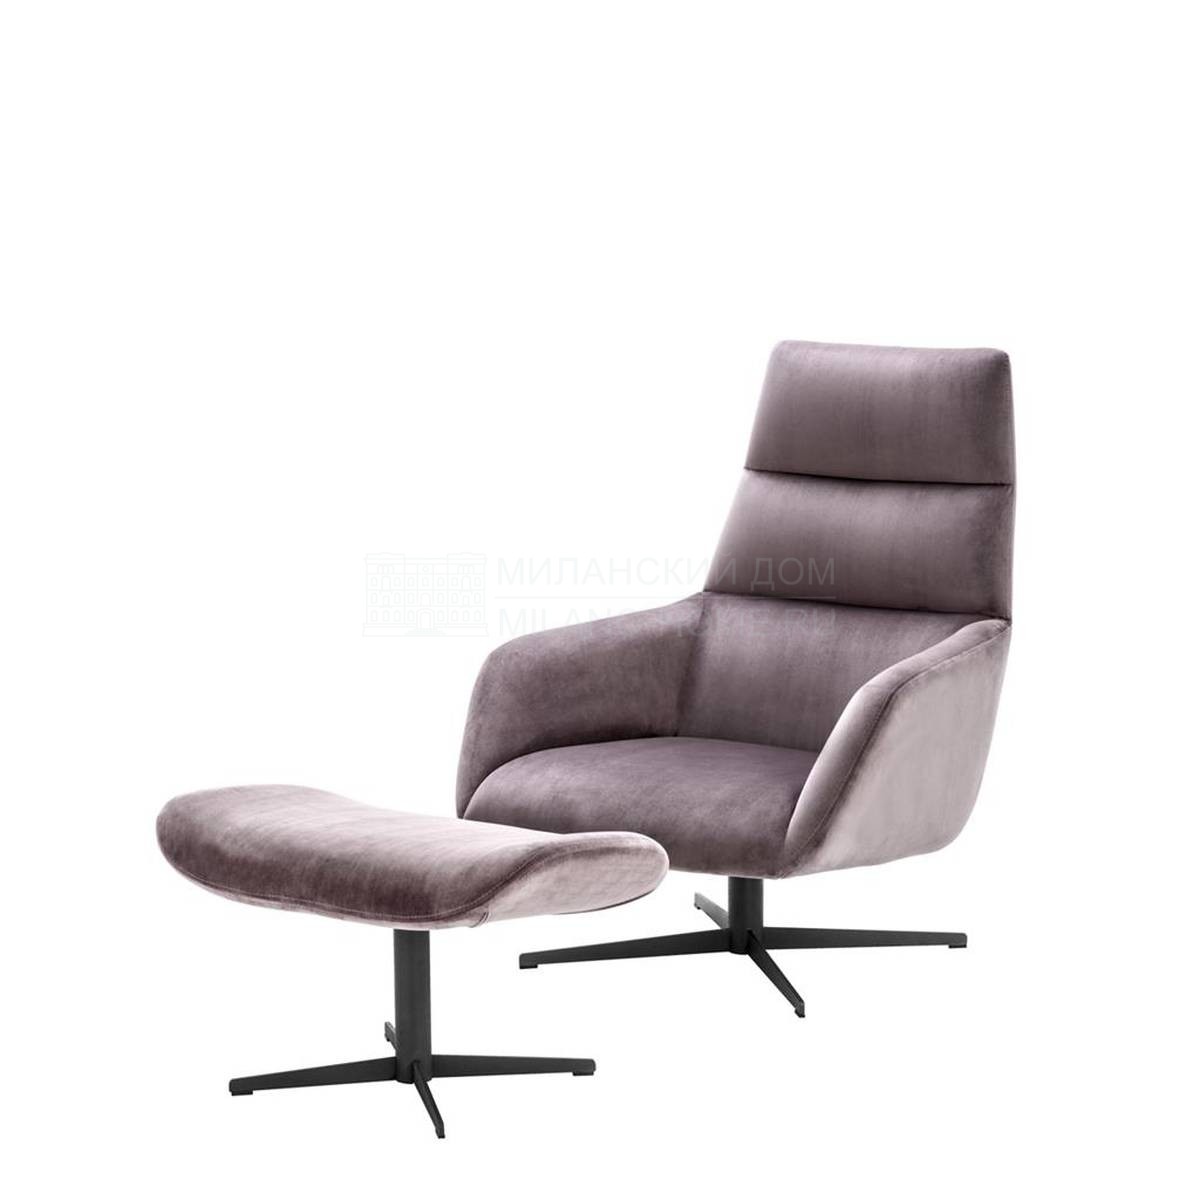 Лаунж кресло Swivel Chair из Голландии фабрики EICHHOLTZ